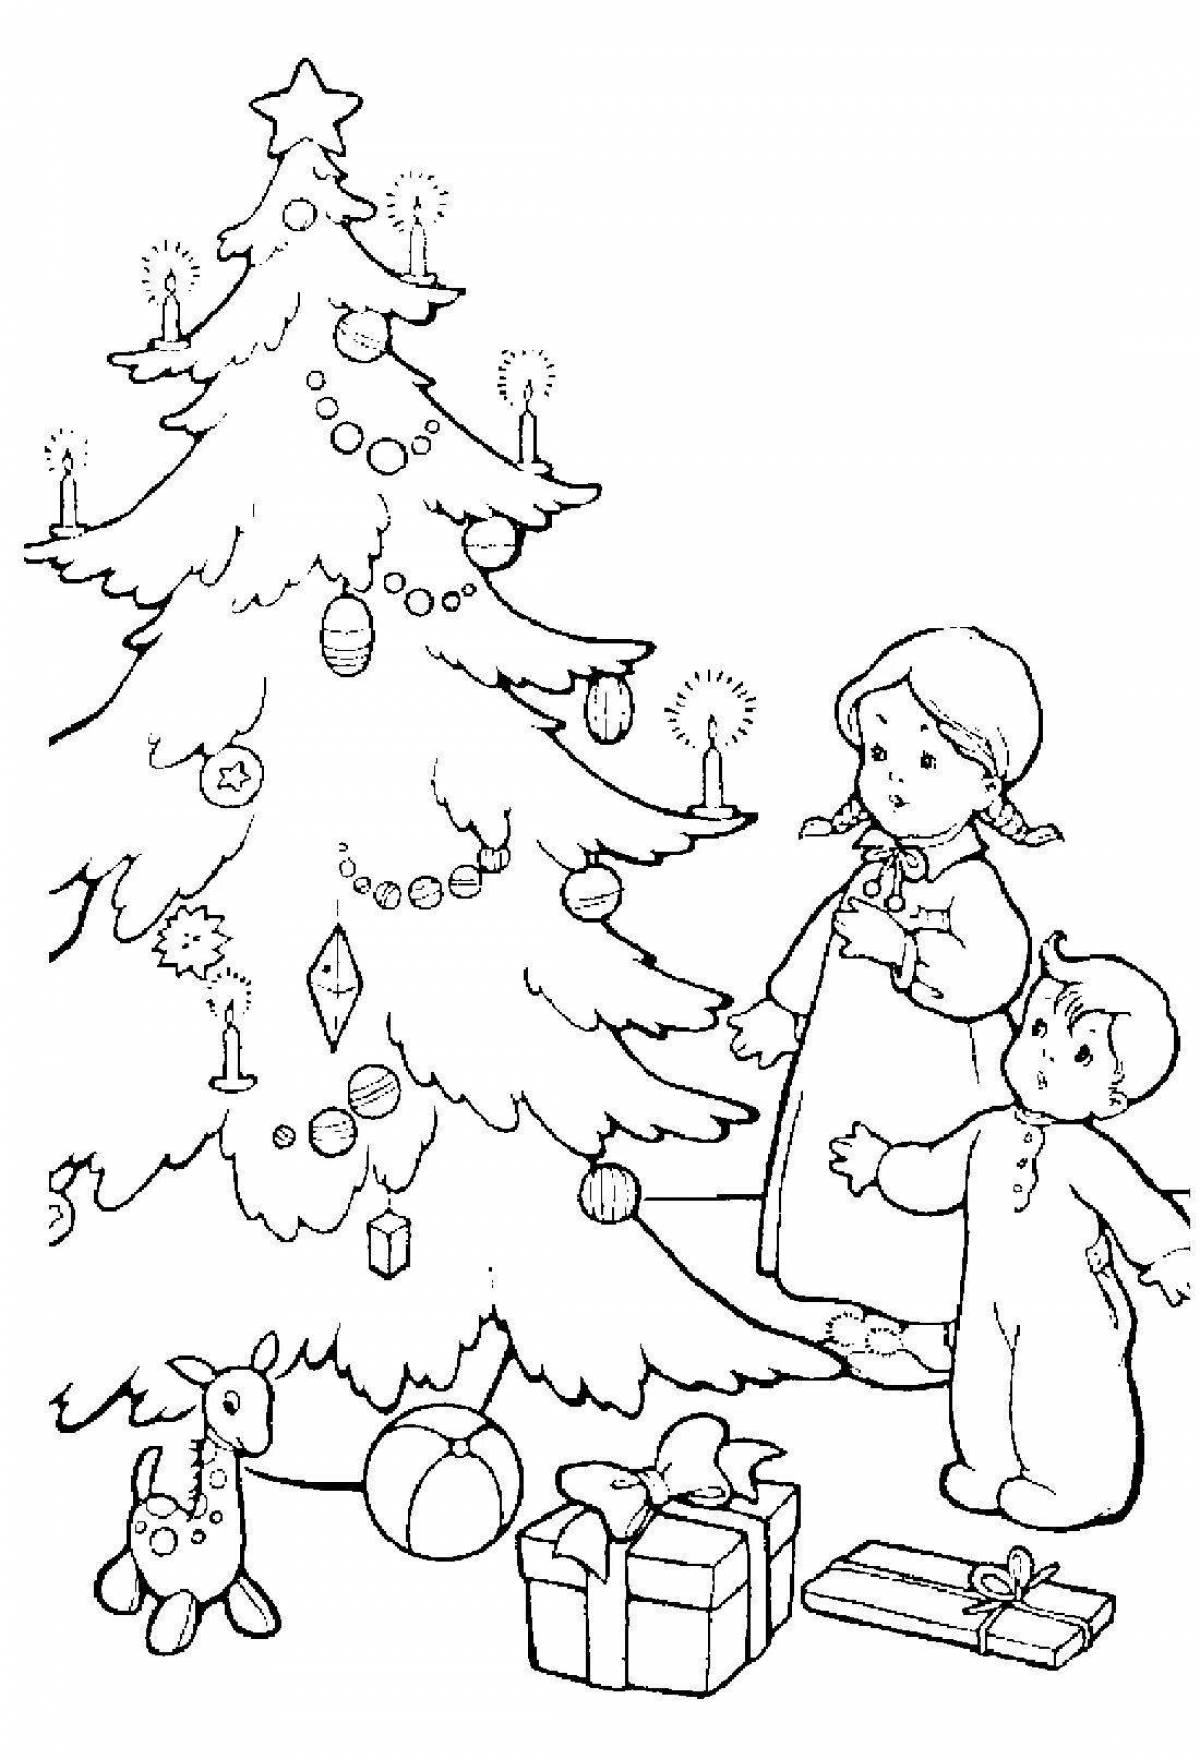 Delightful December coloring book for kids